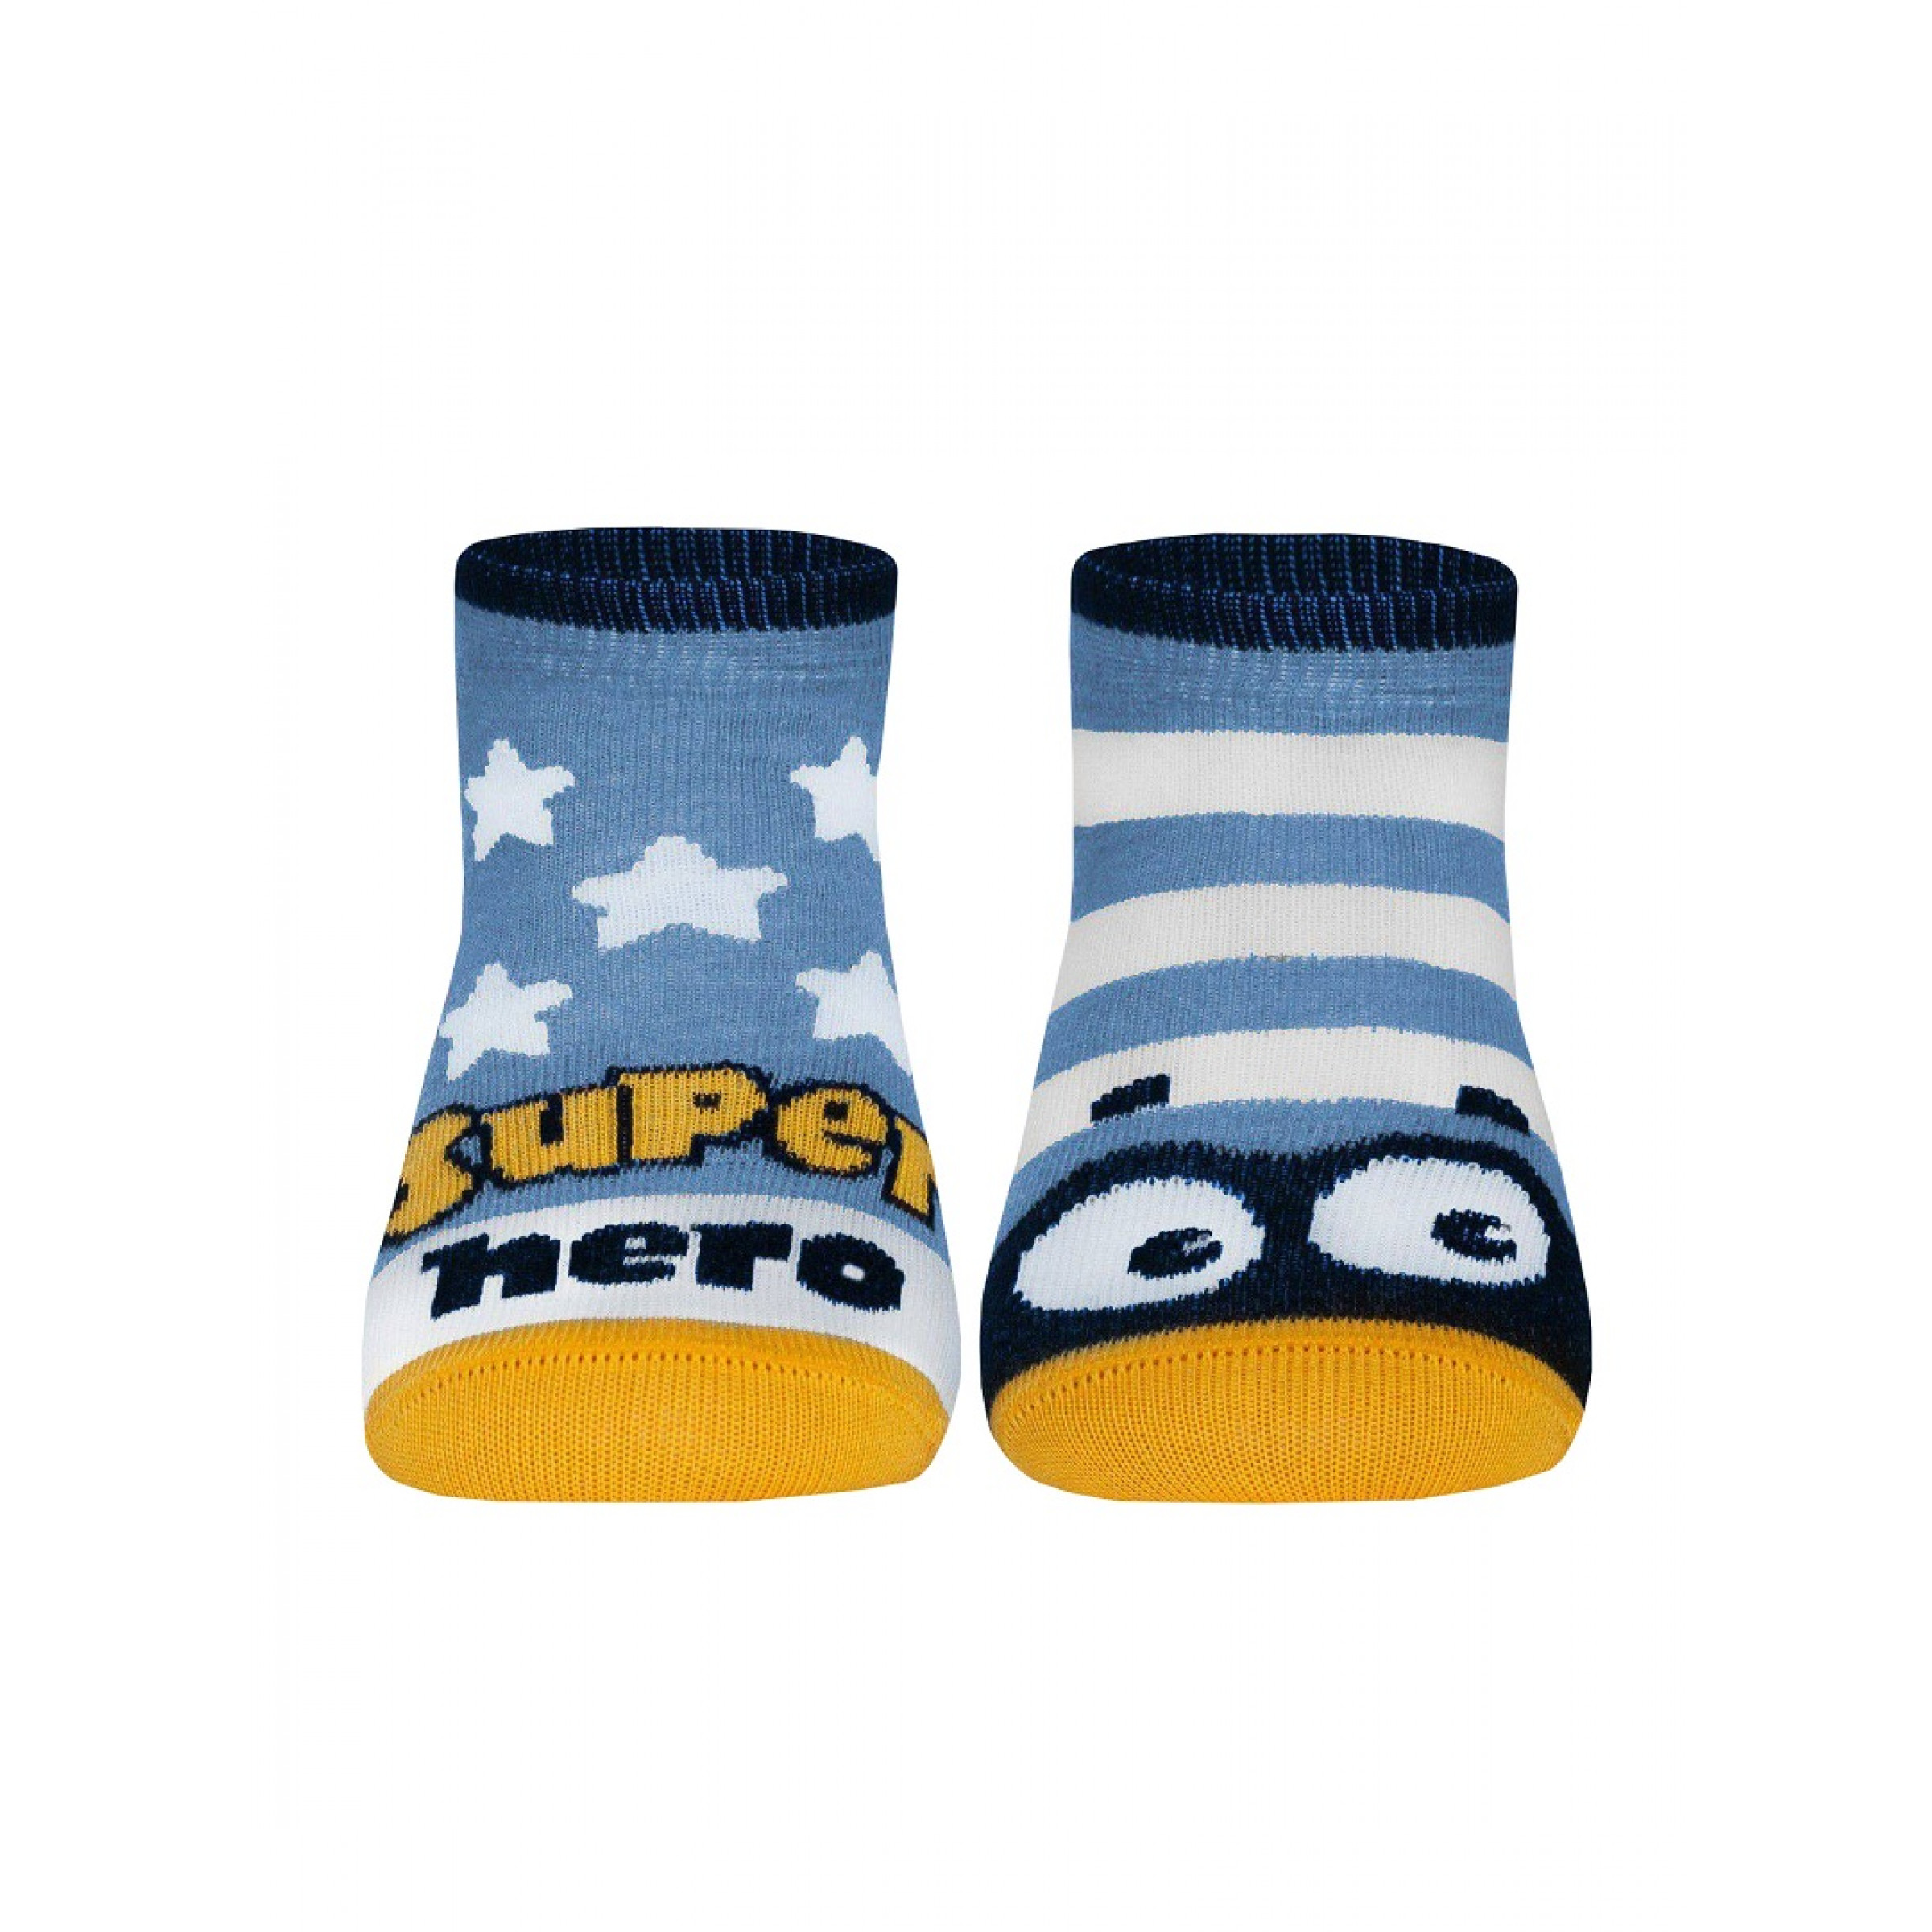 Детские носки Conte Tip-top Веселые ножки 21-23 размер голубой цвет